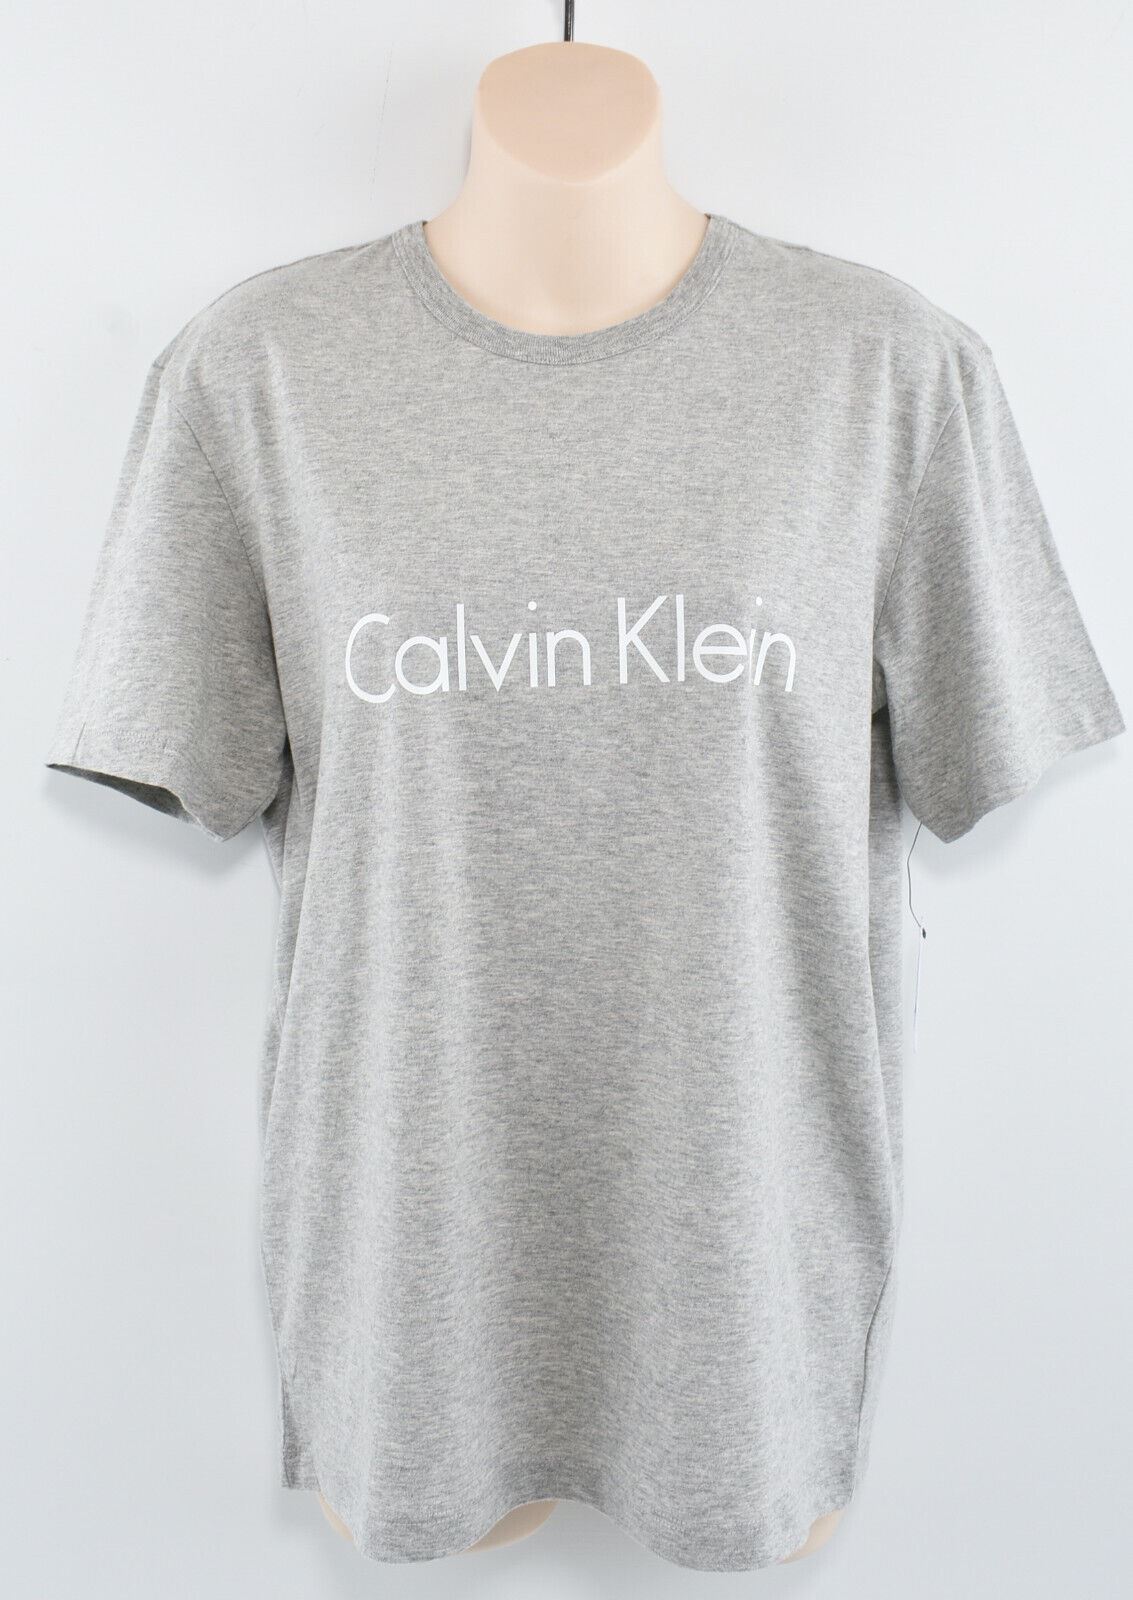 CALVIN KLEIN Women's Lounging / Sleepwear T-shirt, Grey Heather, size S /UK 10